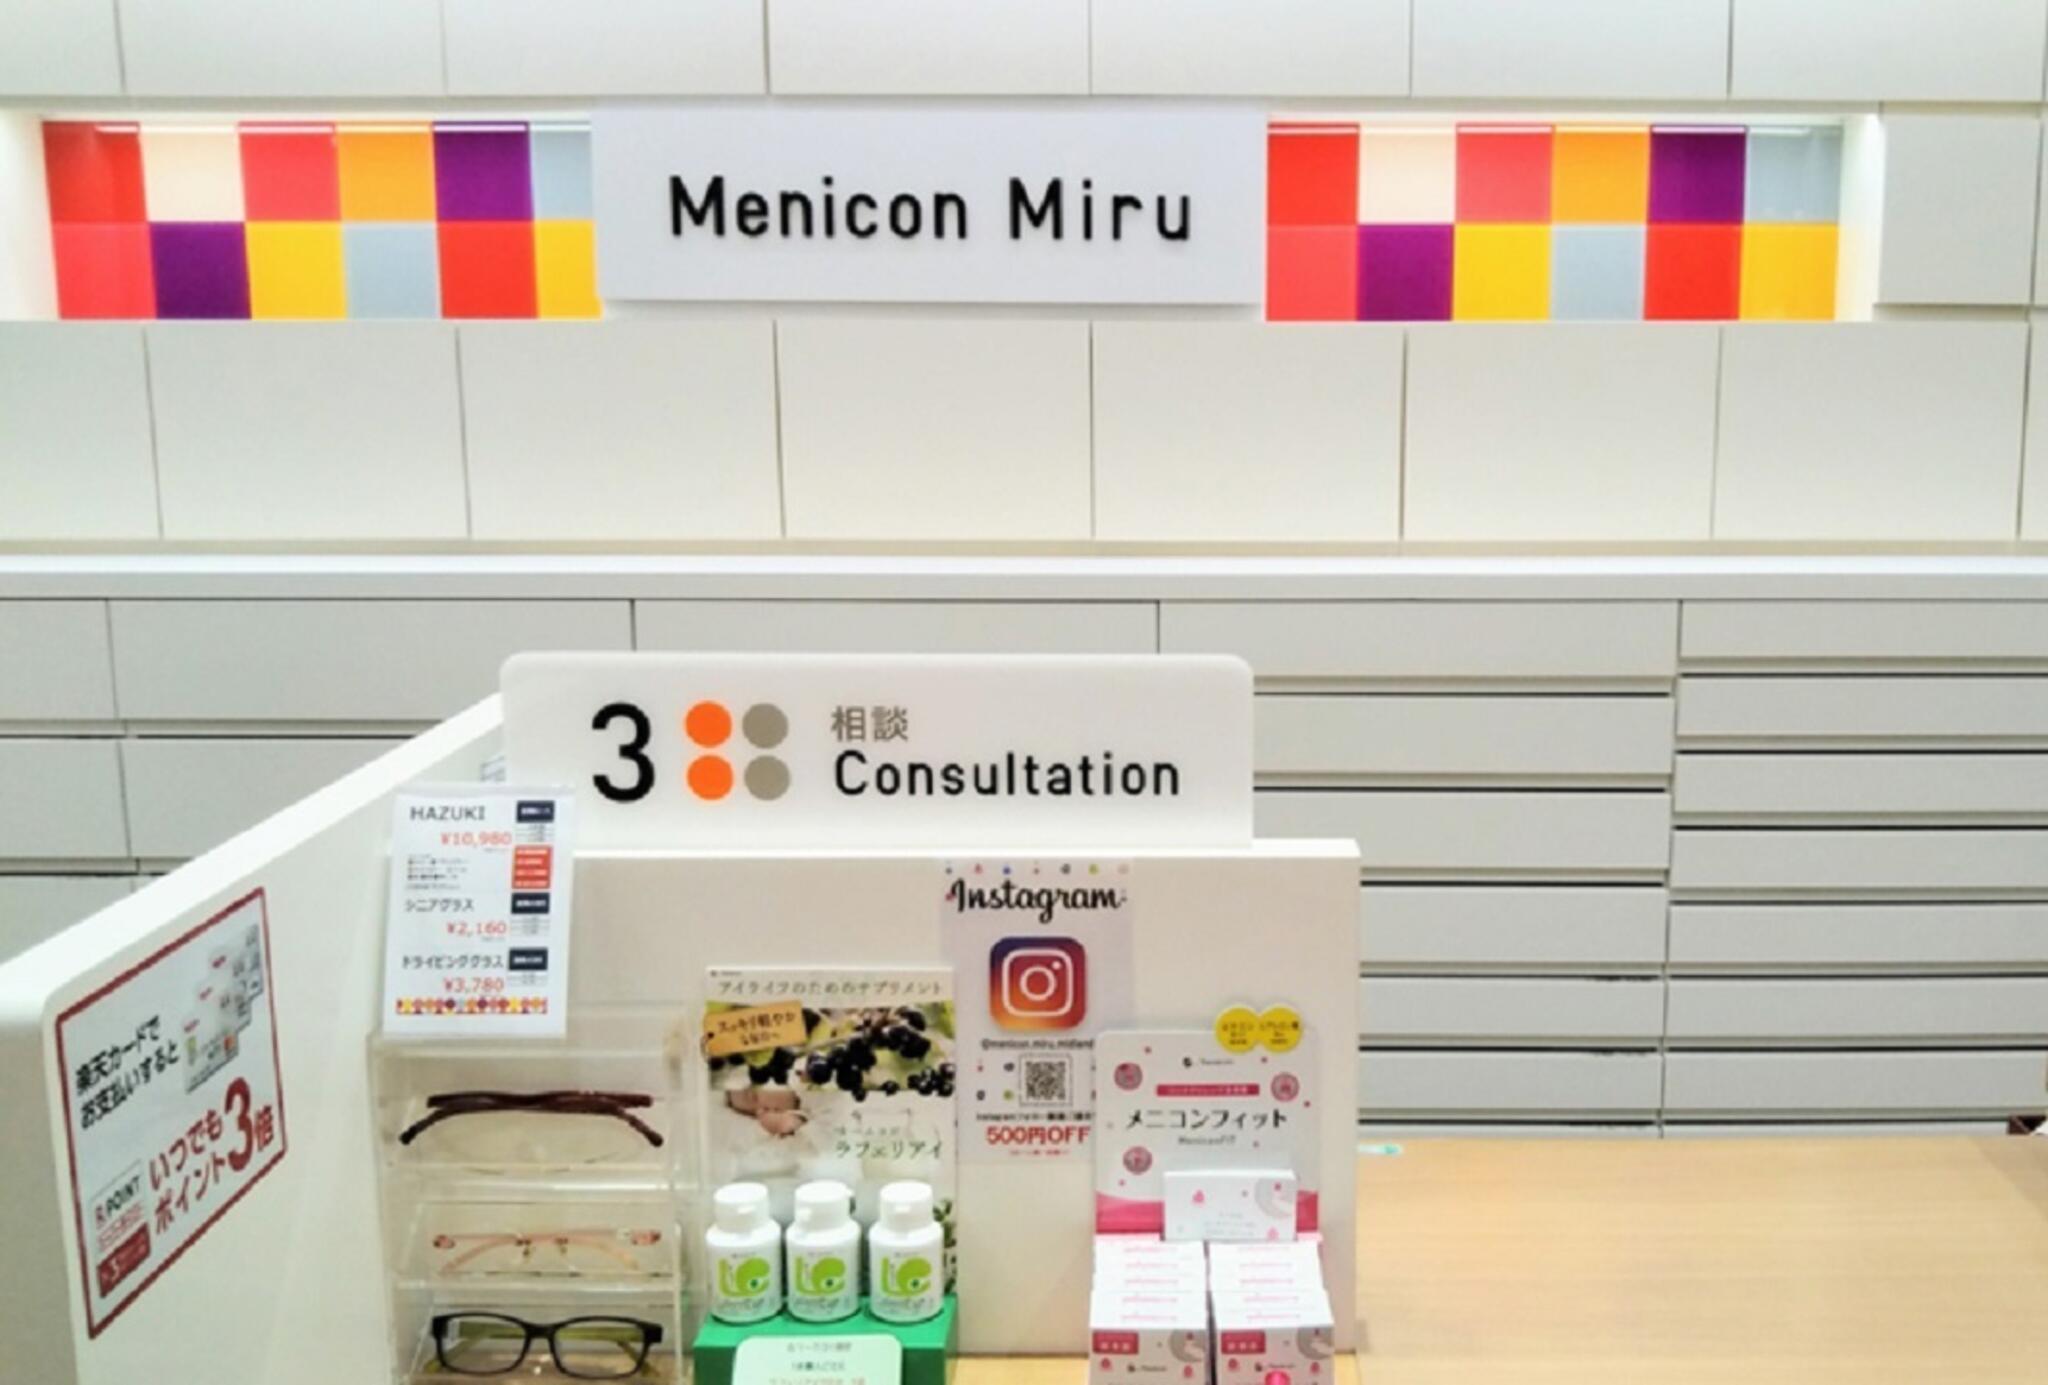 Menicon Miruミッドランド店の代表写真4